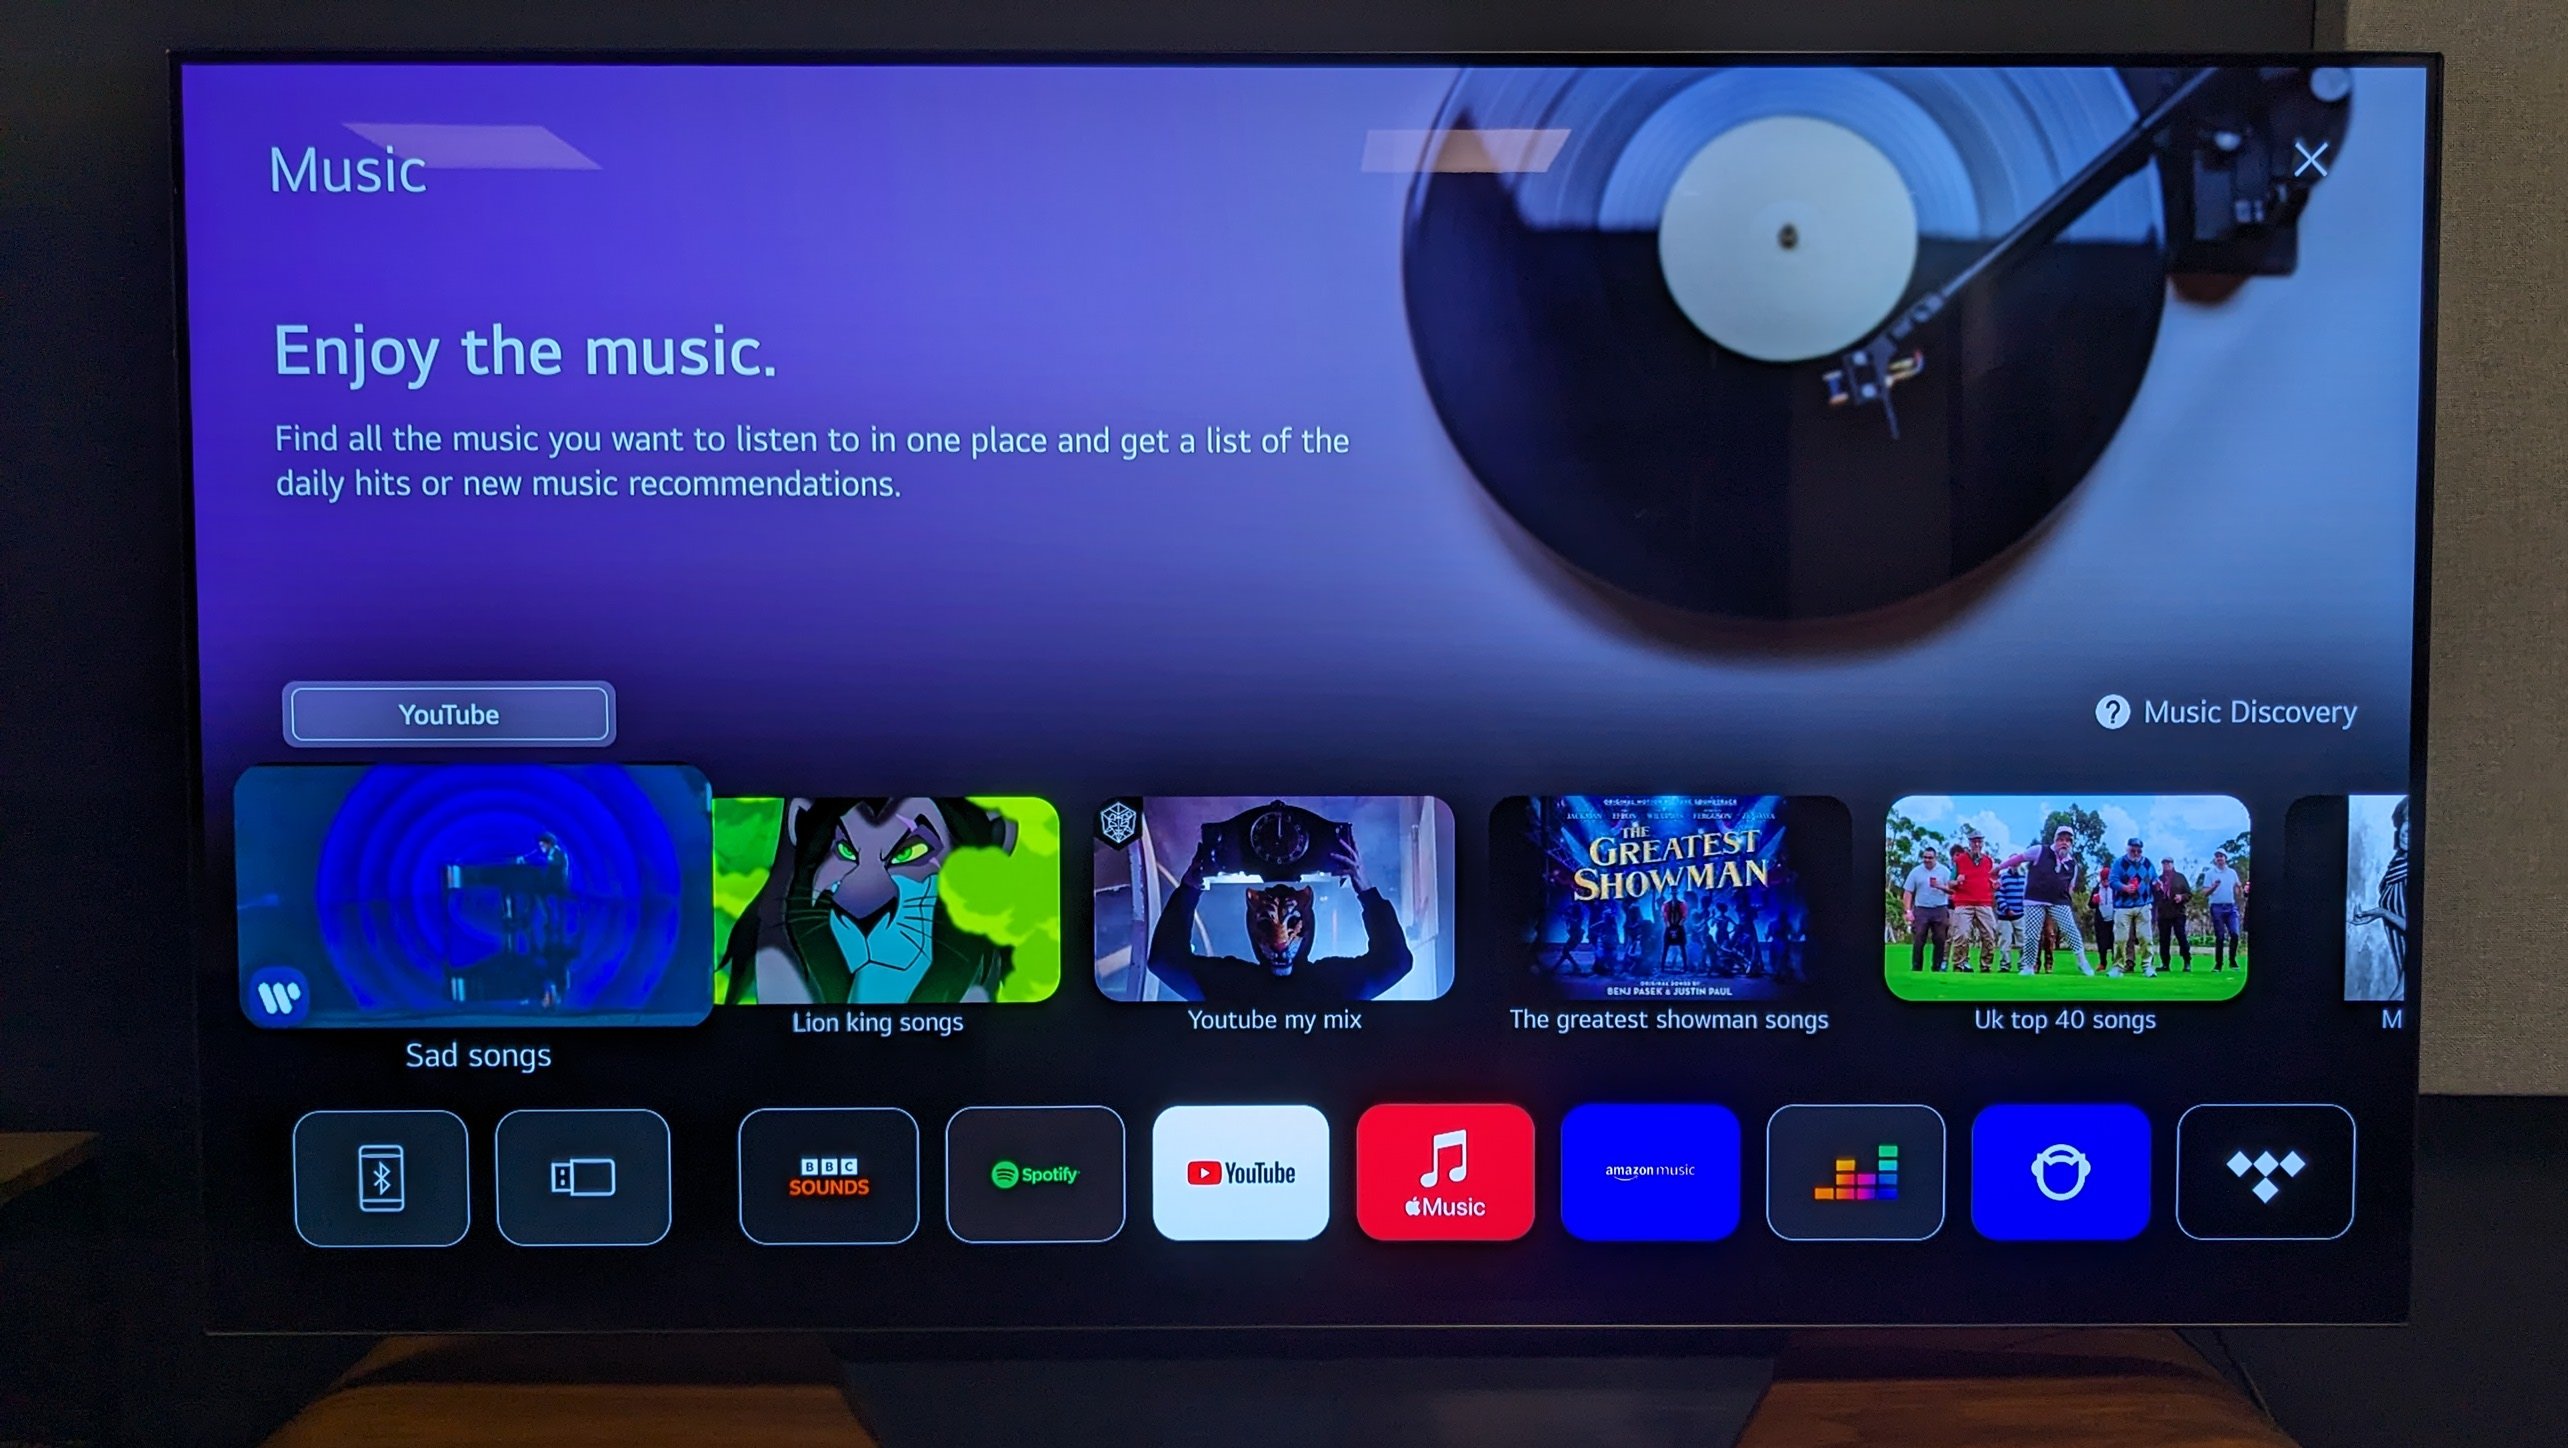 LG B3 OLED with music menu on screen